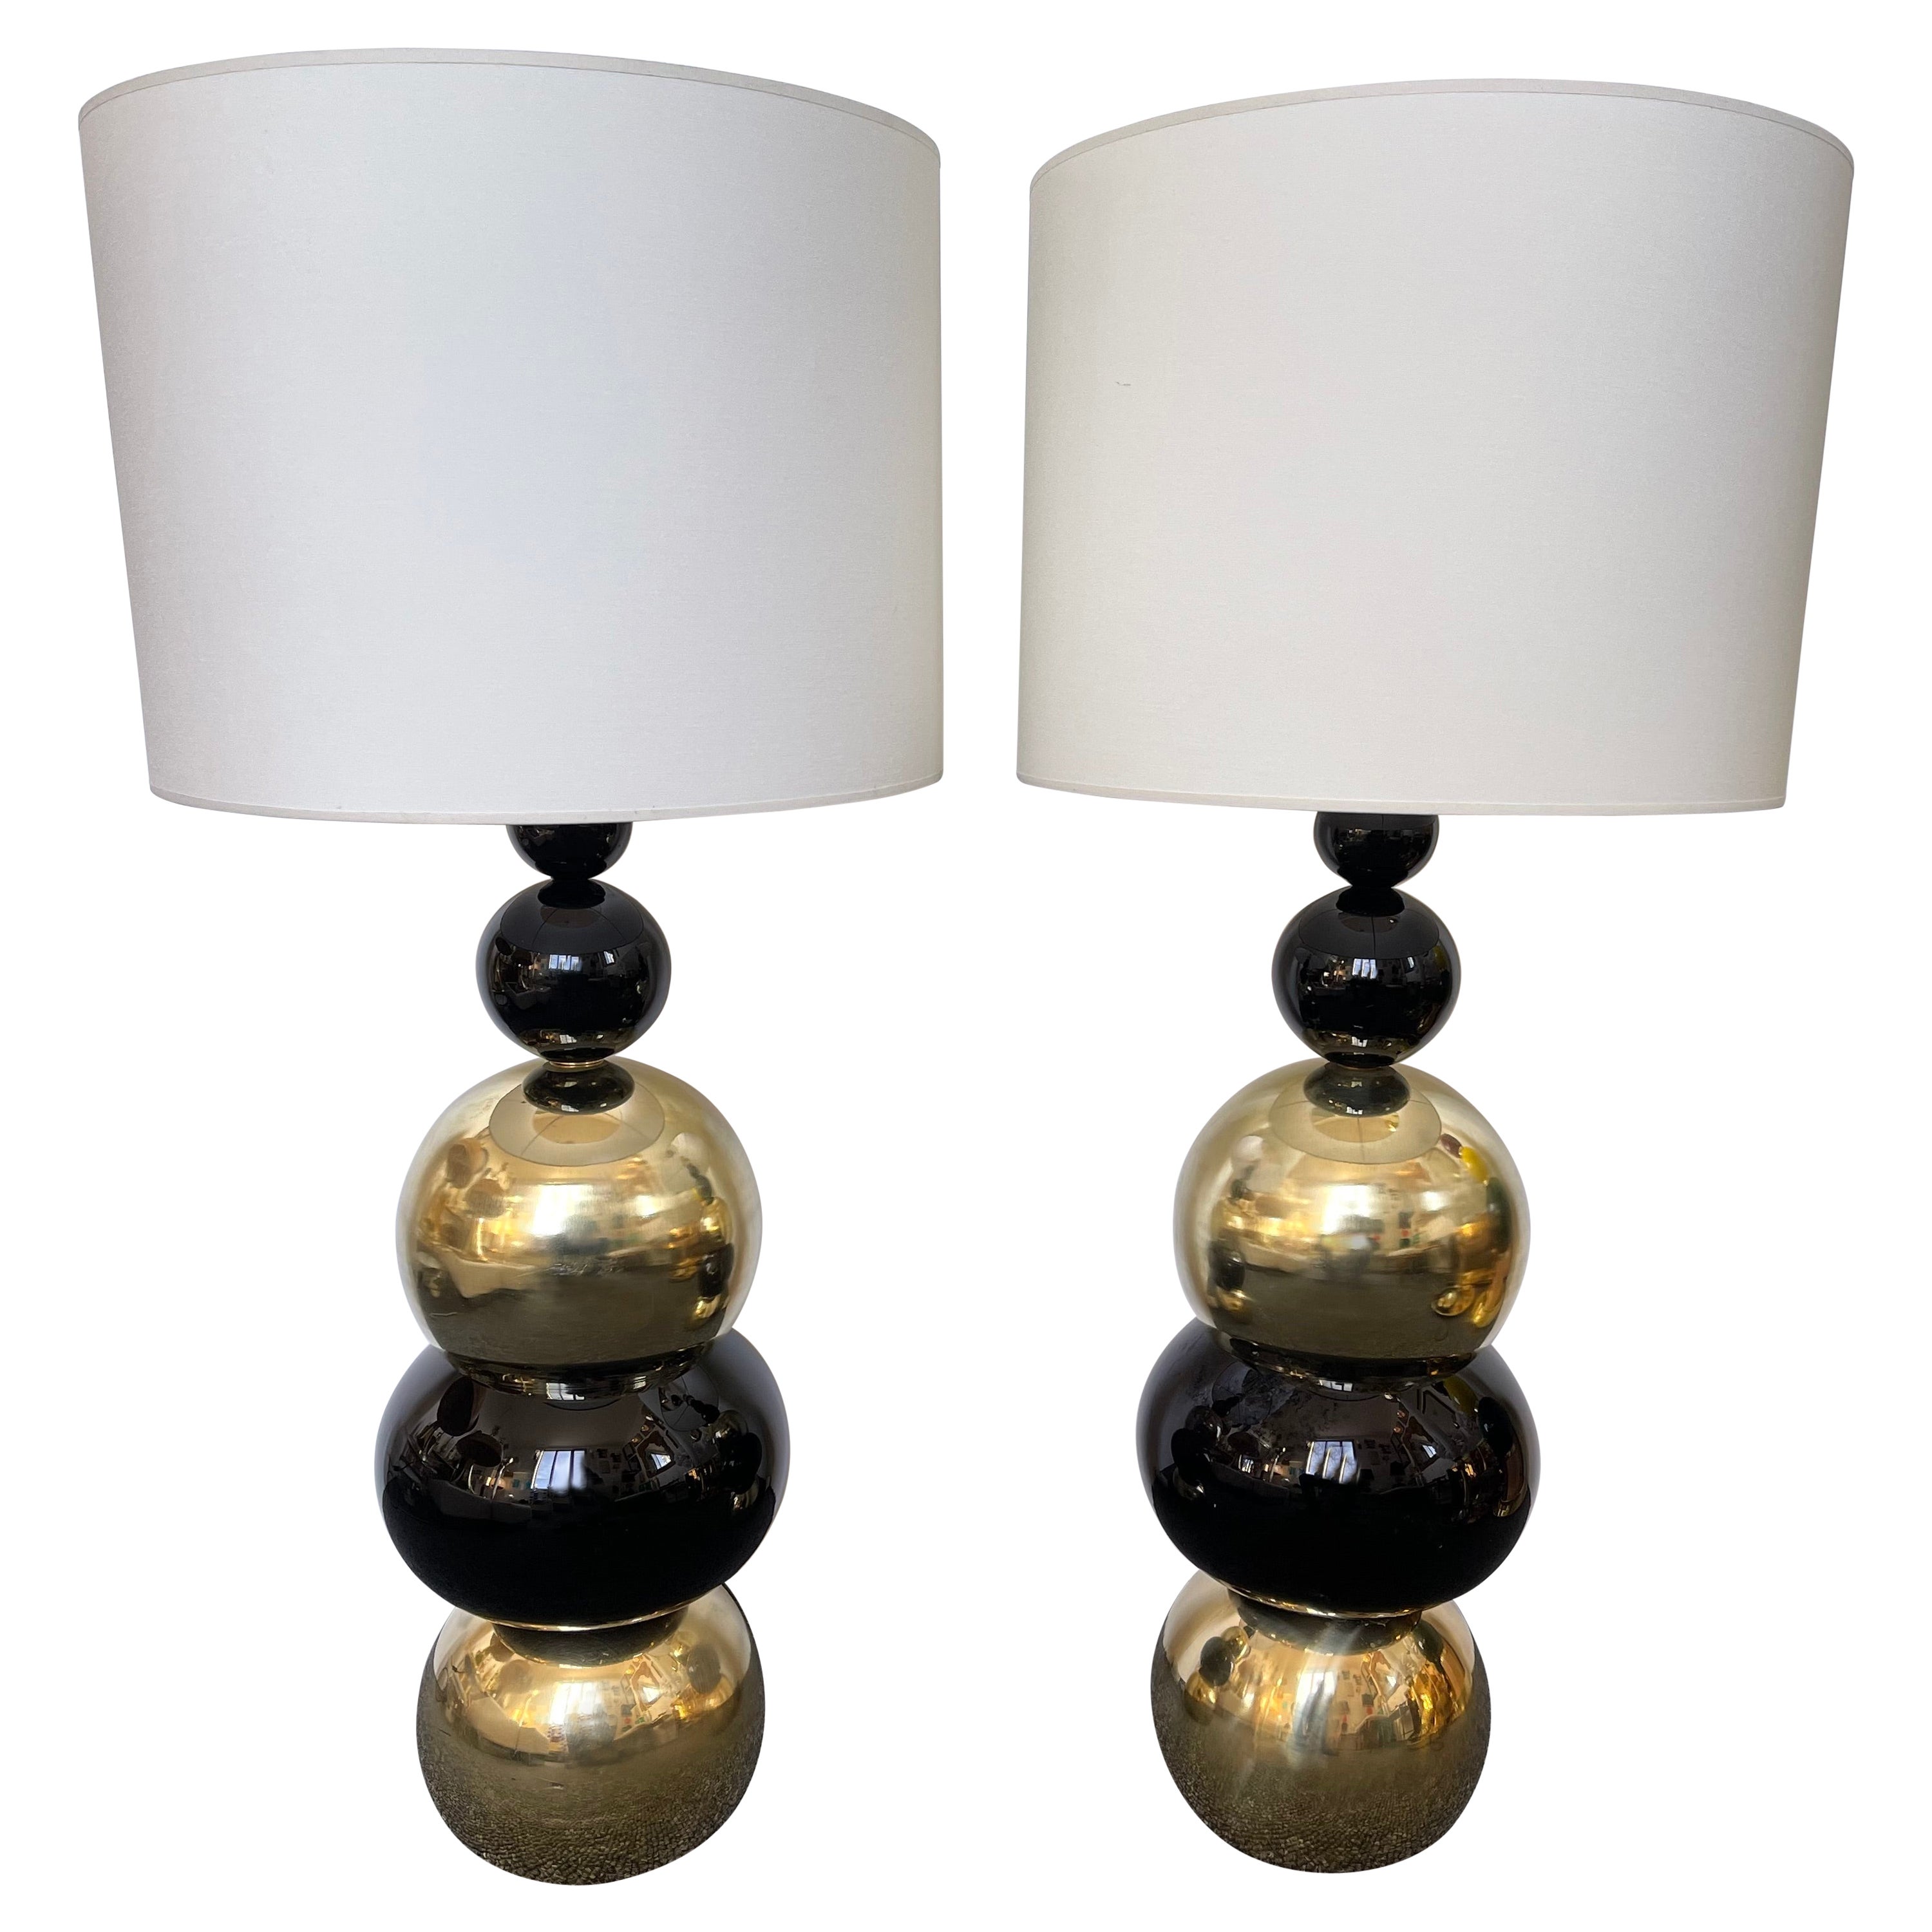 Paire de lampes Atomo contemporaines en laiton et verre de Murano, Italie